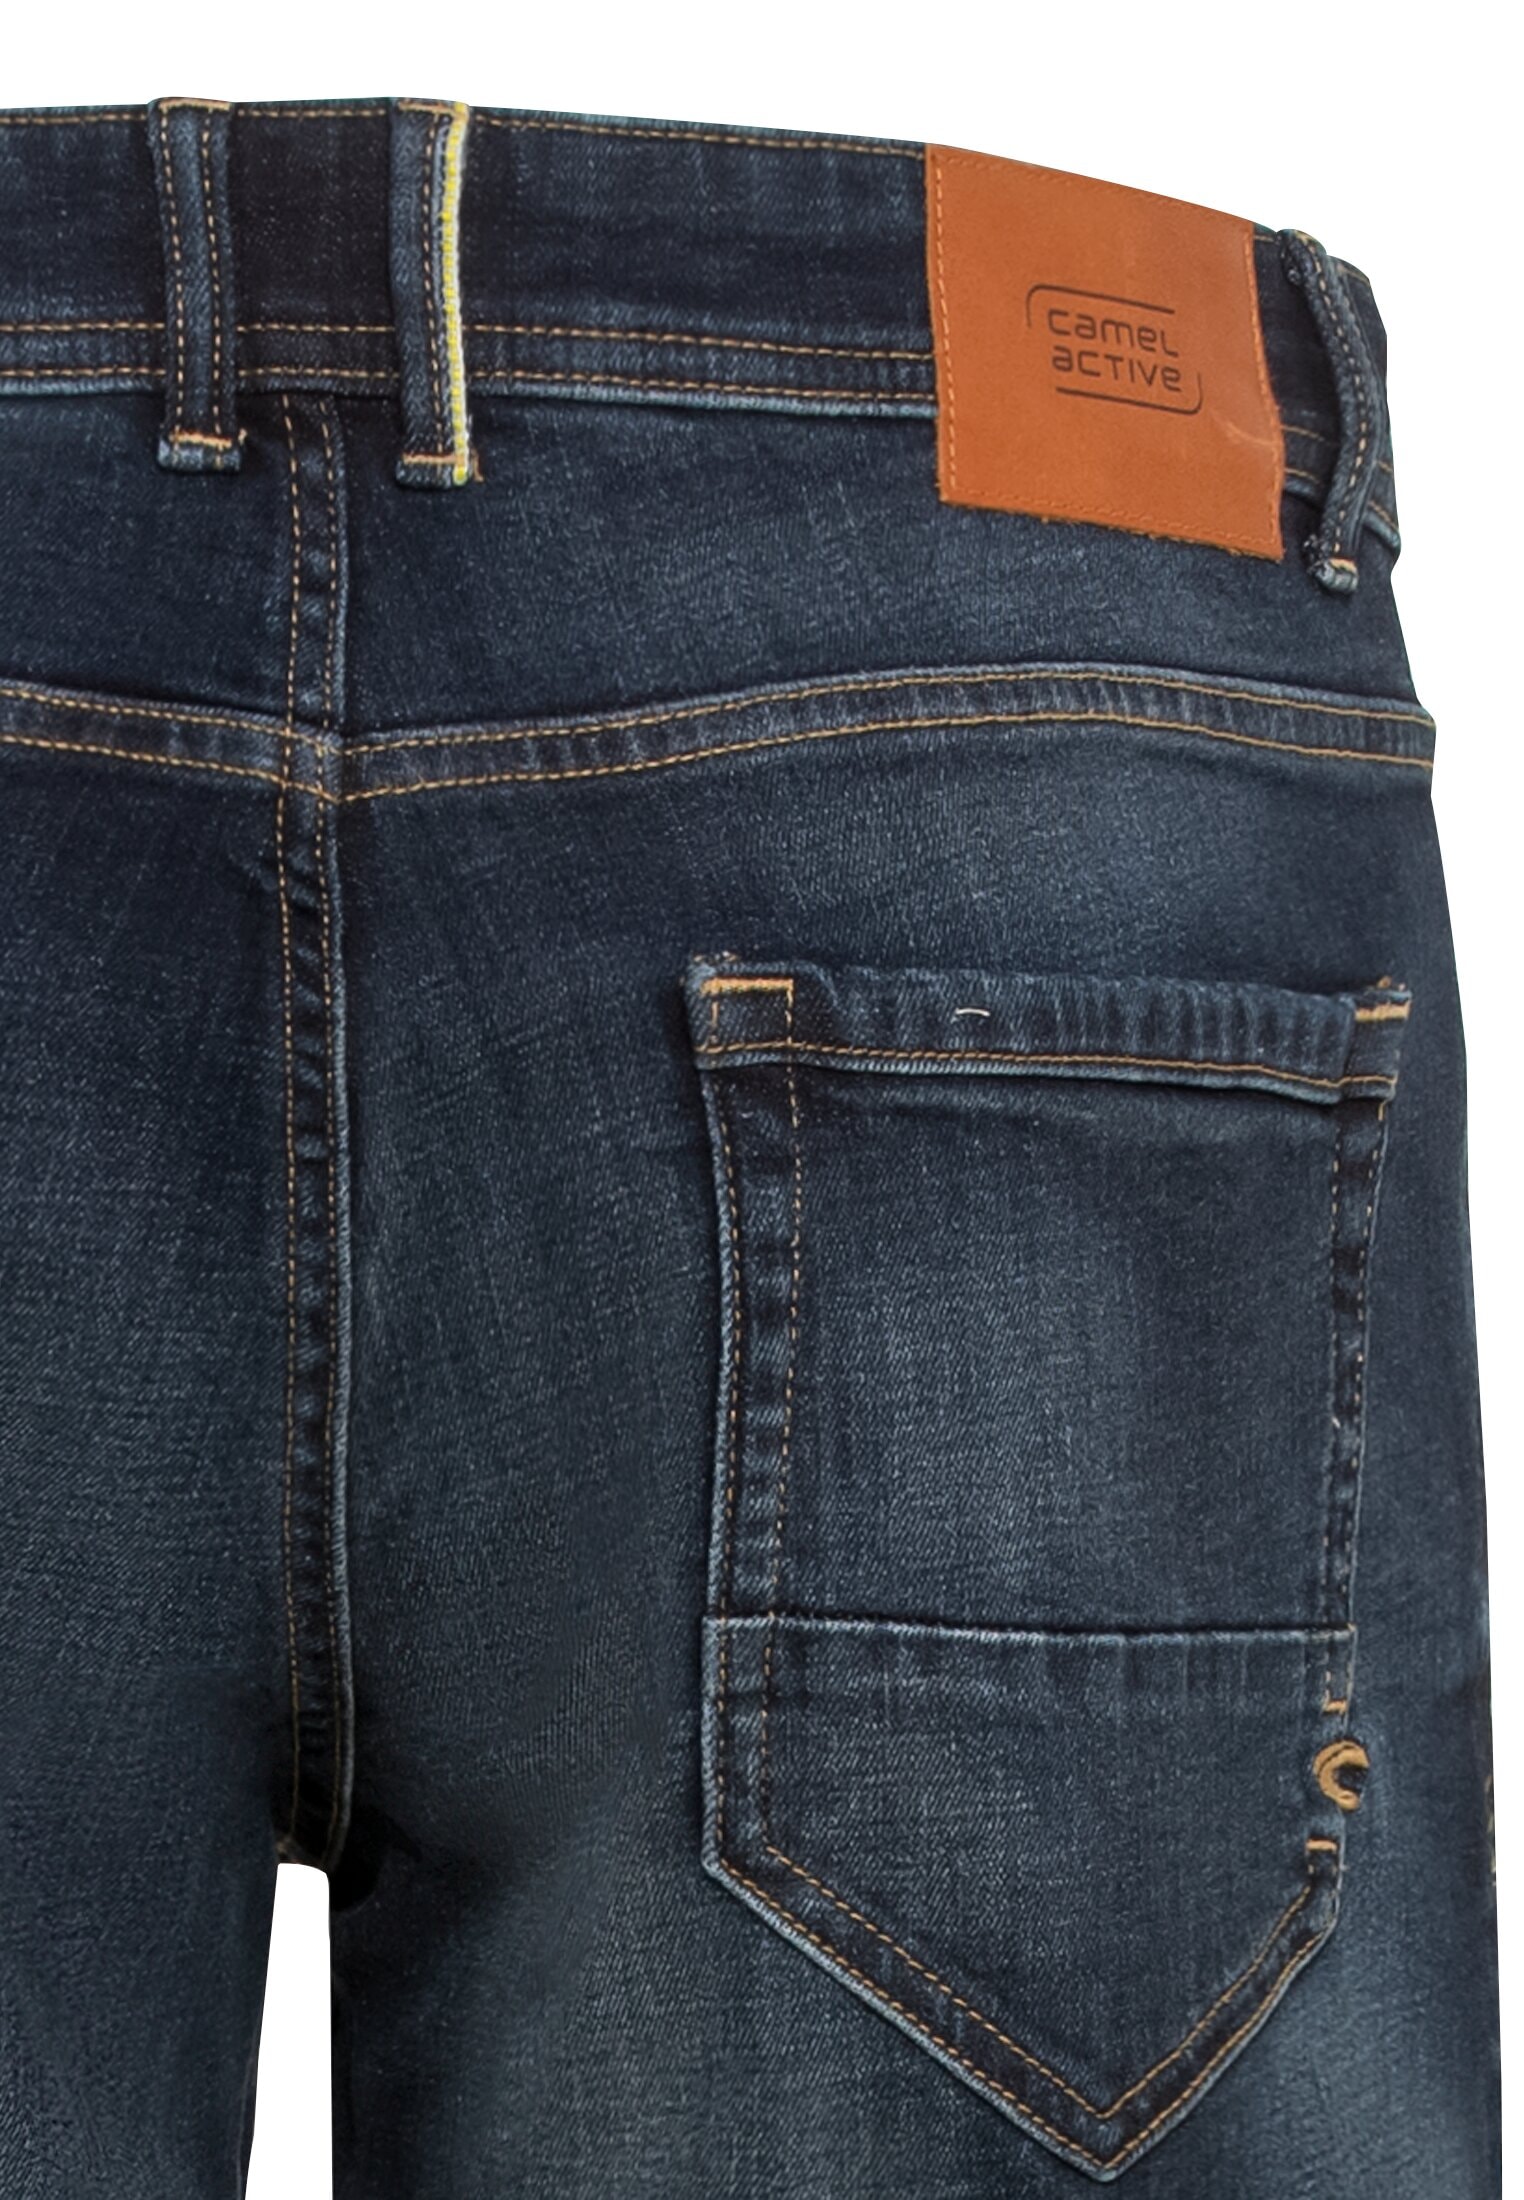 camel active 5-Pocket-Jeans, mit kontrastfarbenen Nähten